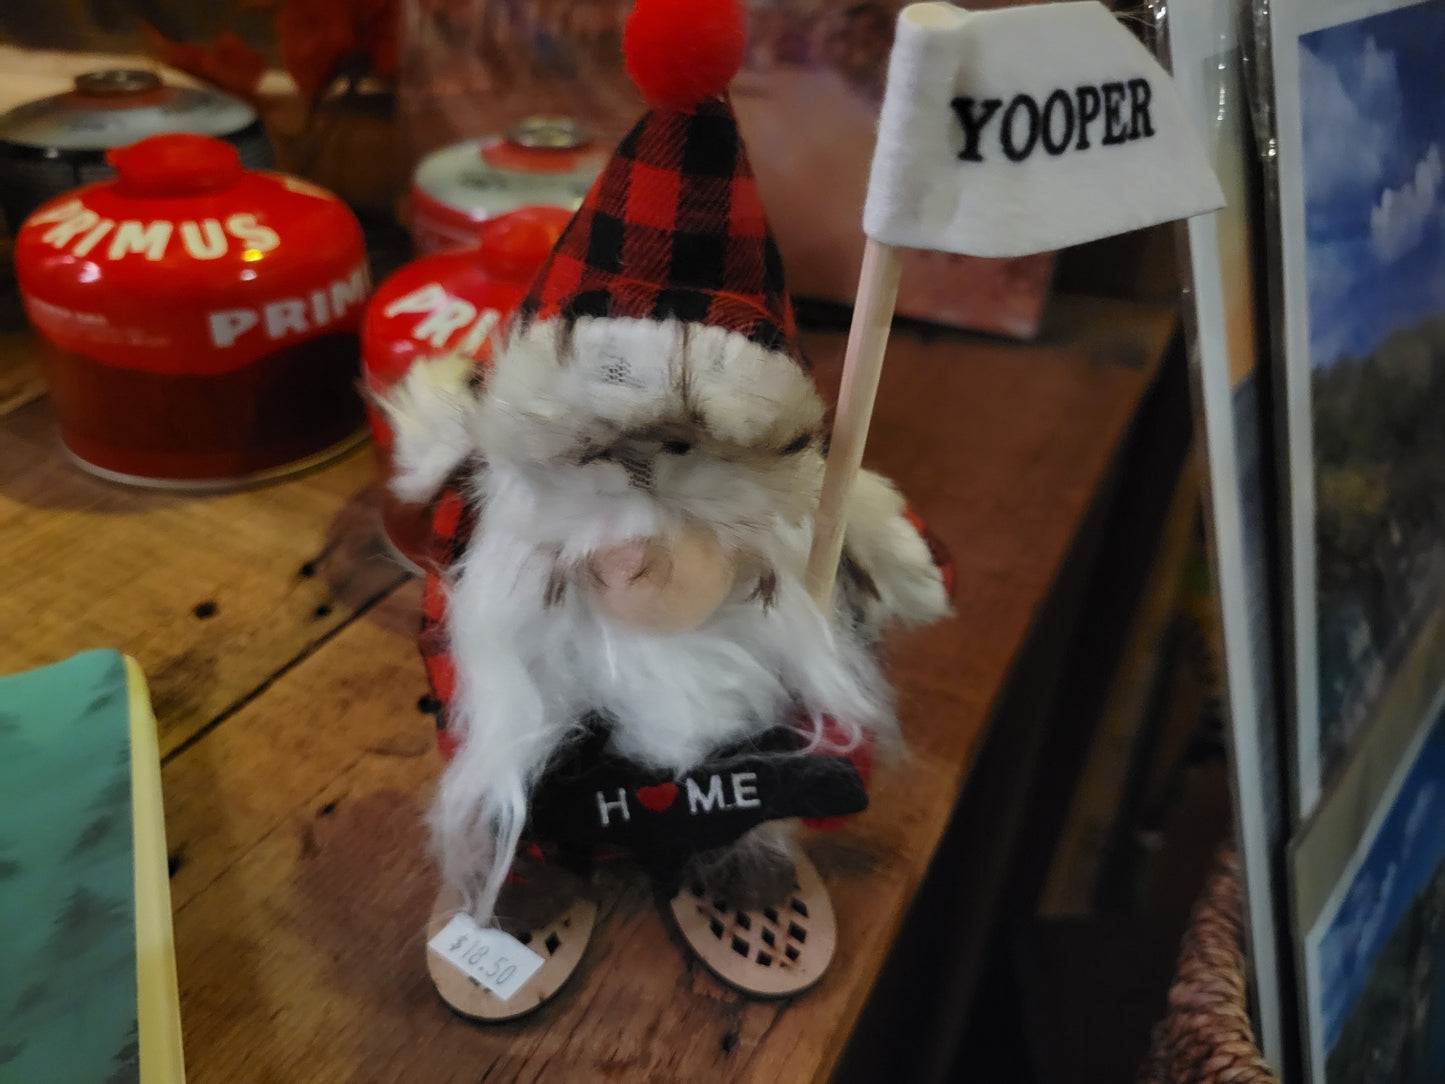 Yooper gnome